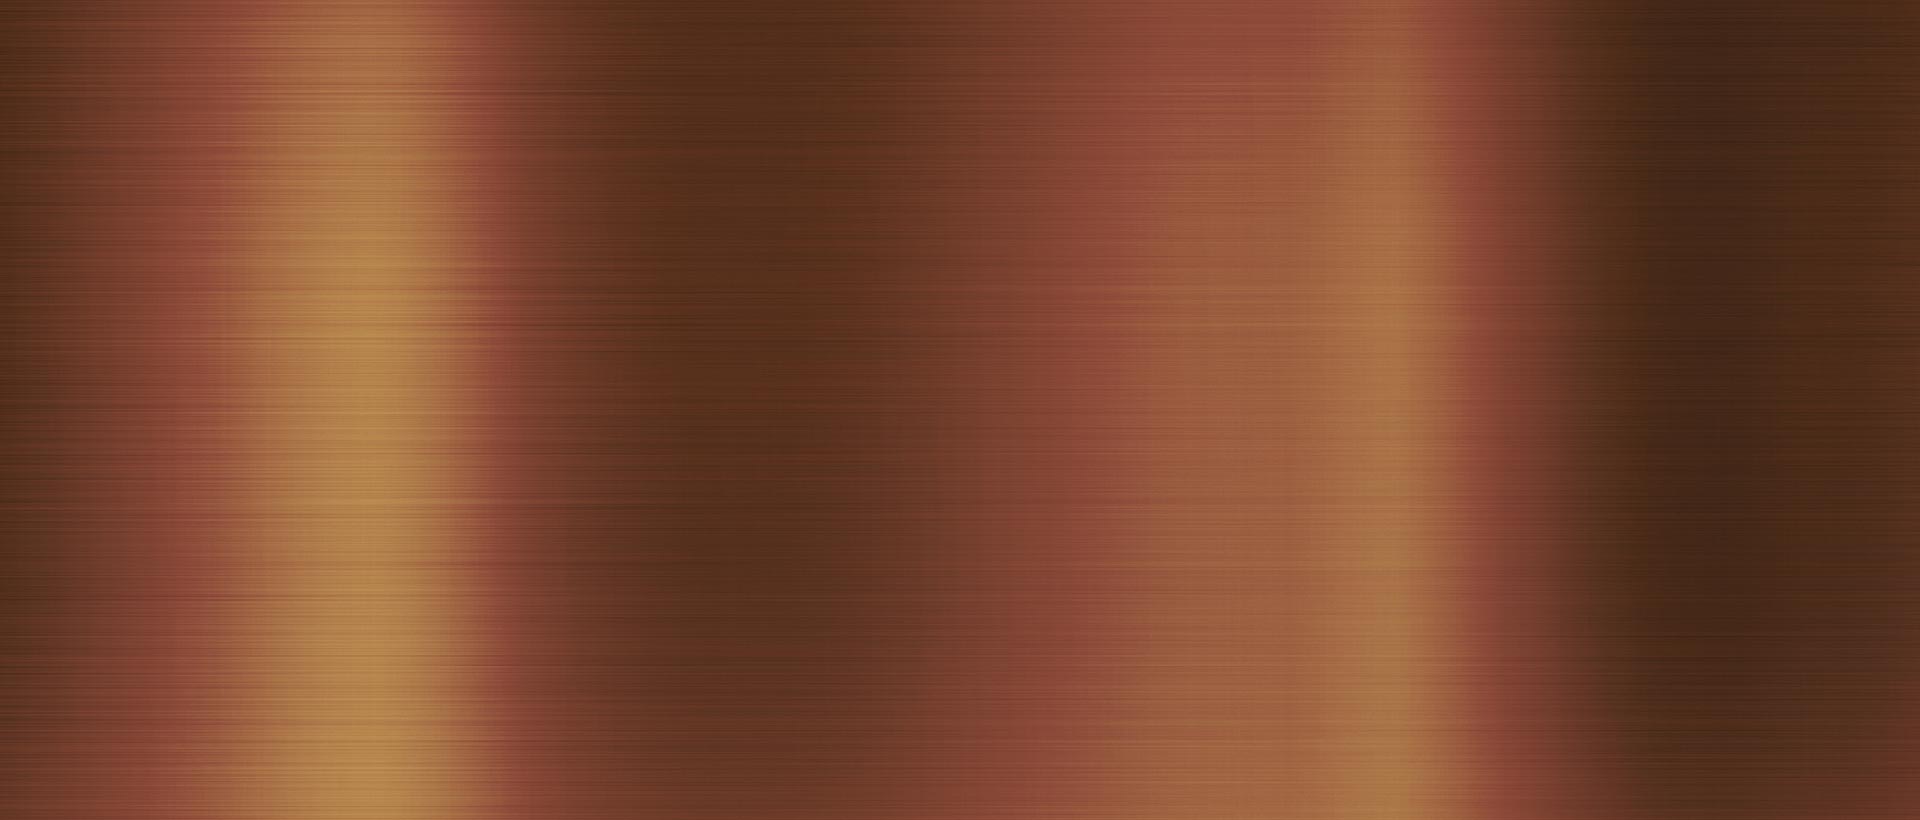 copper background